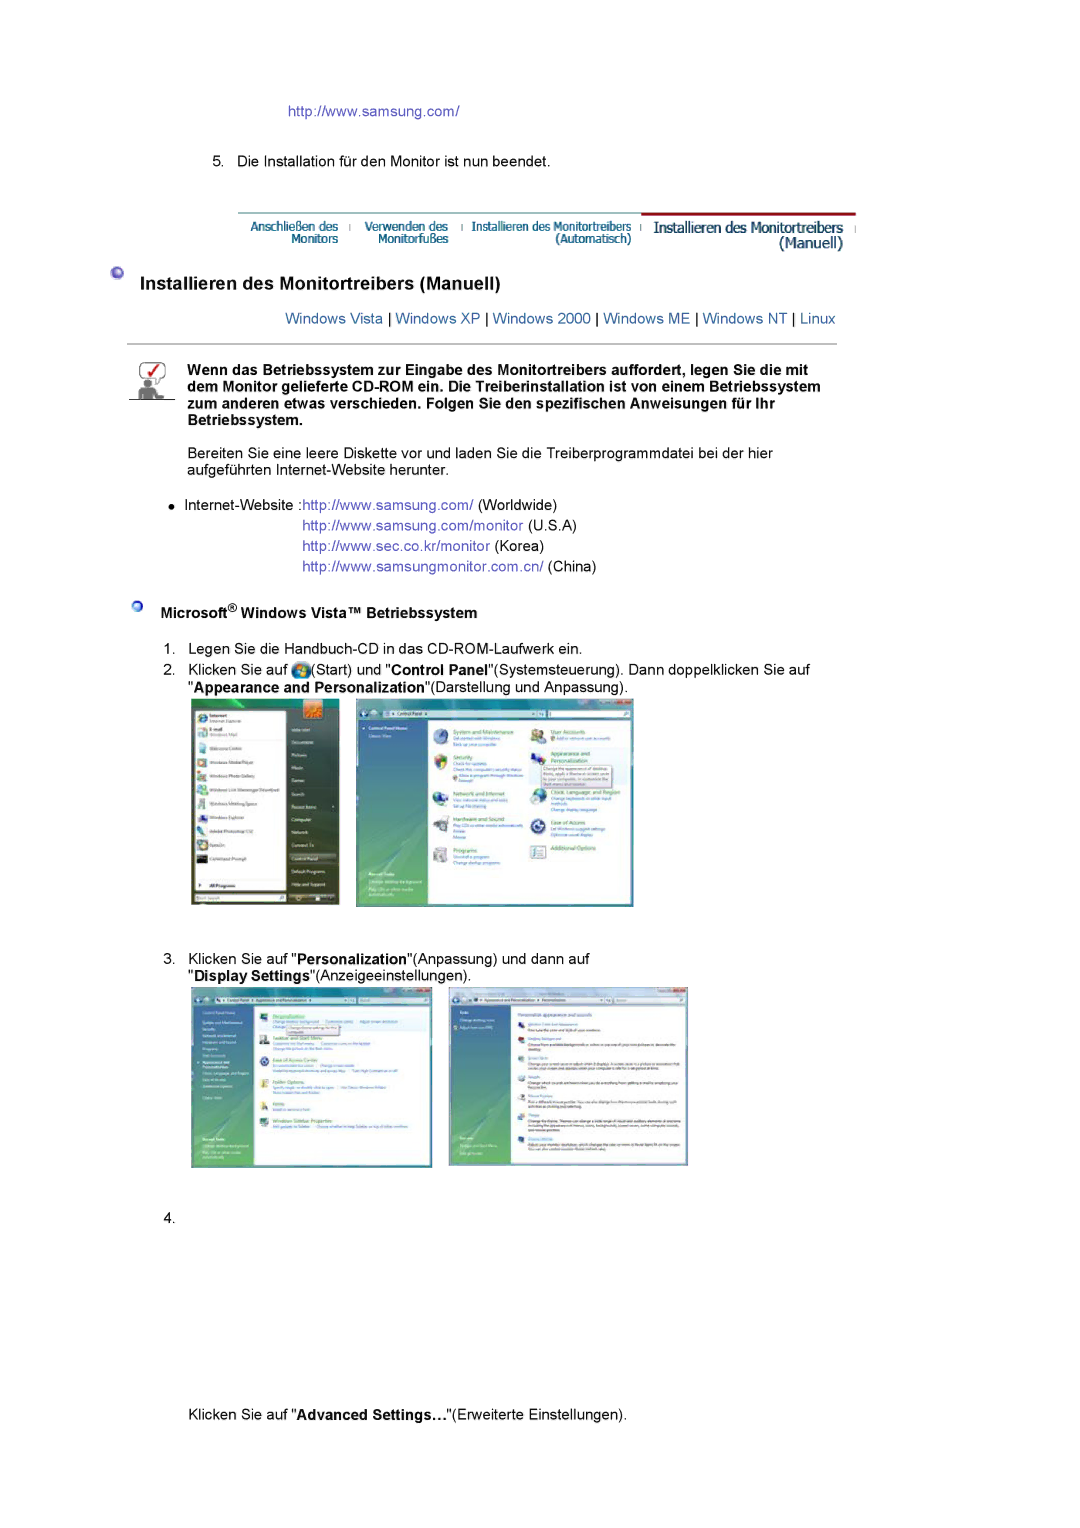 Samsung LS22CRASB/EDC manual Installieren des Monitortreibers Manuell, Microsoft Windows Vista Betriebssystem 